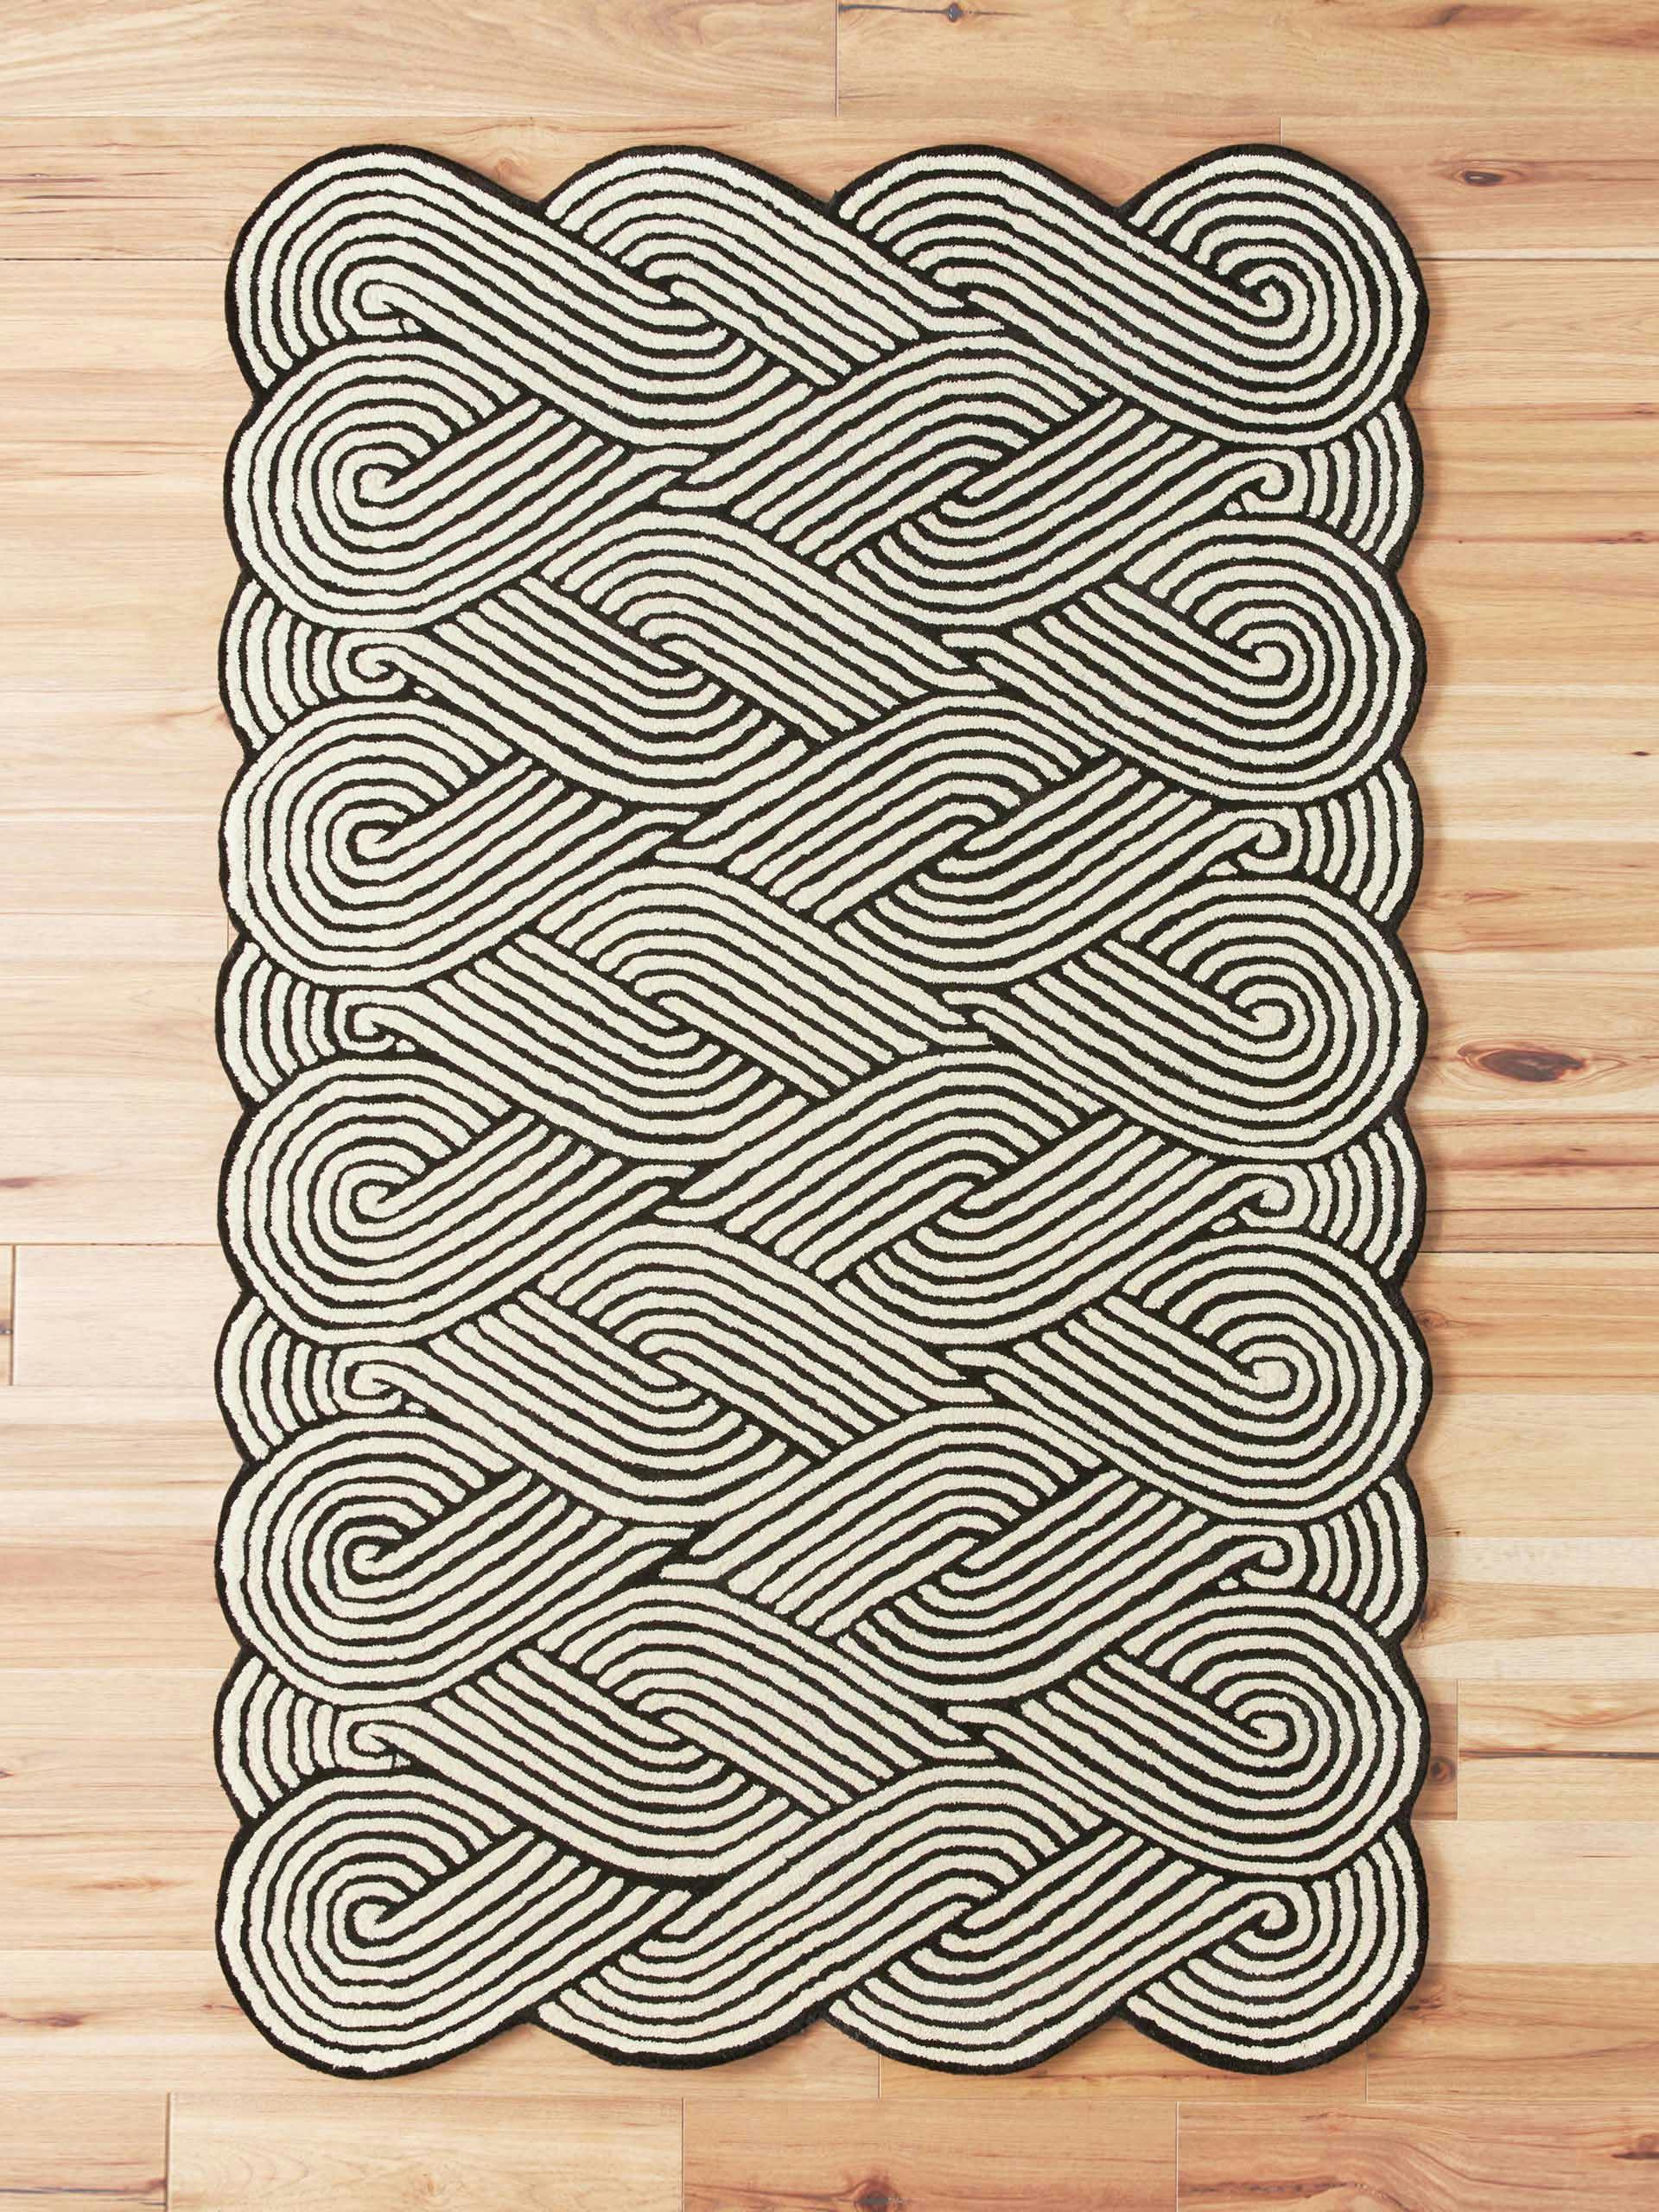 Hand-tufted black and white swirl rug